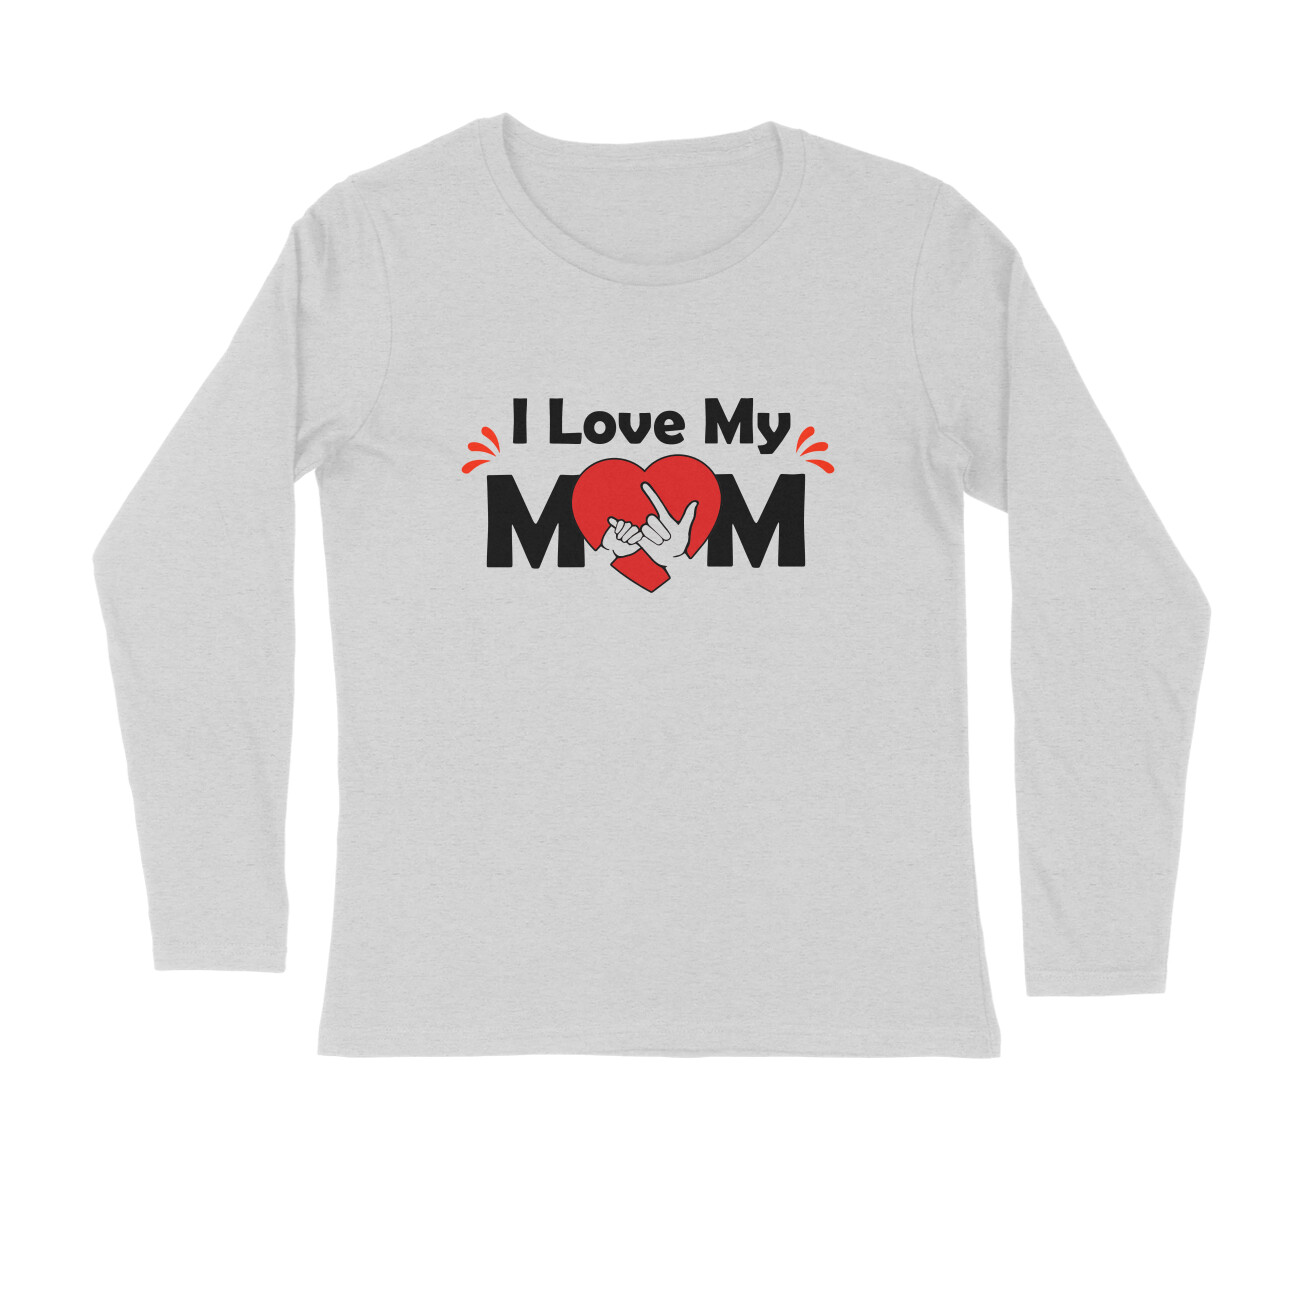 I love you my mom (ISL) - Boonary Cart